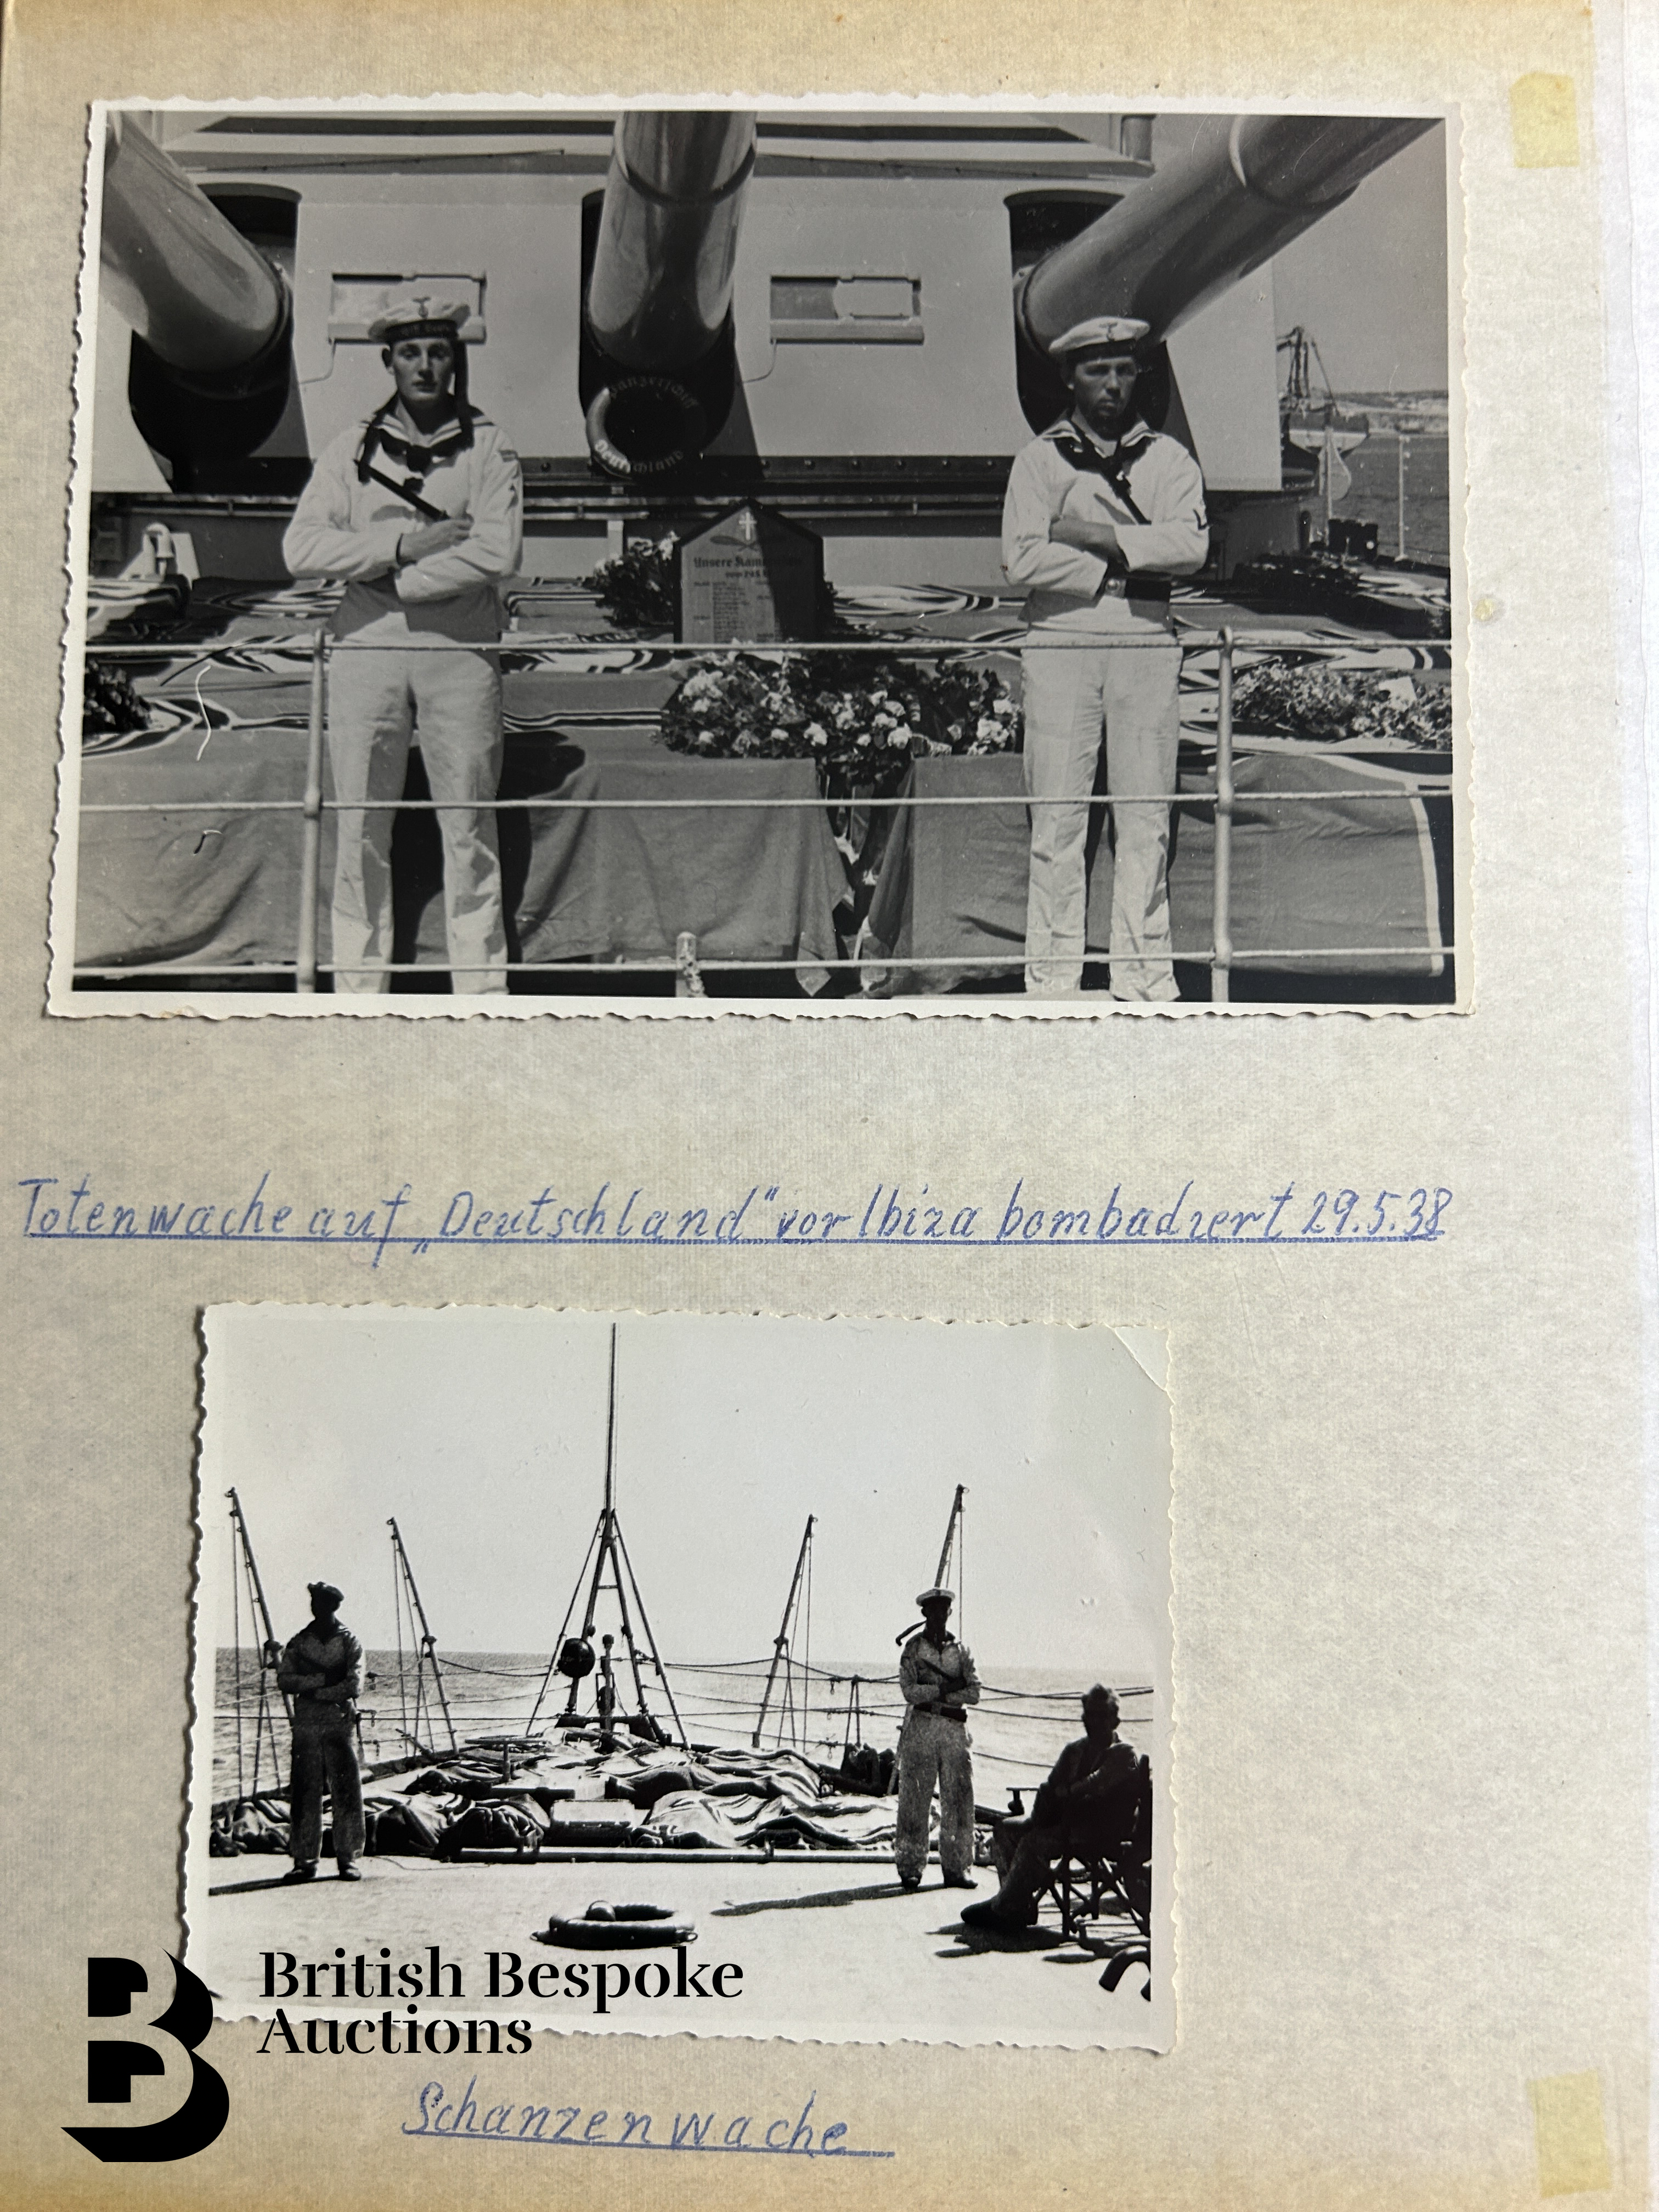 Graf Spee (Pocket Battleship) Interest, incl. Photographs, Documents, Miscellanea - Image 69 of 126